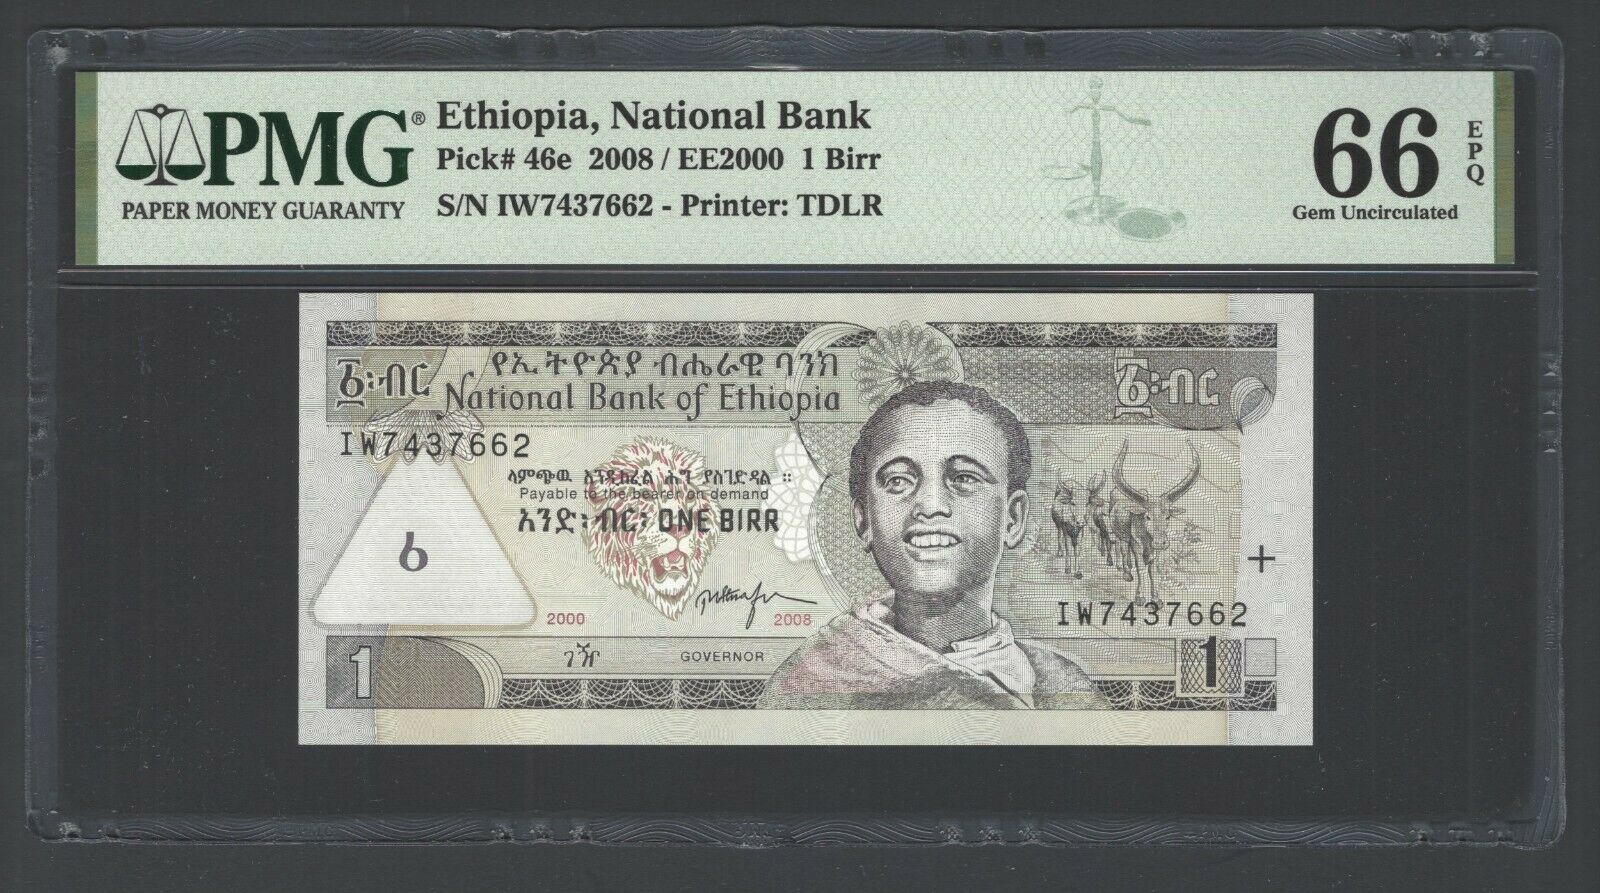 Ethiopia 1 Birr 2006/ee1998 P46e Uncirculated Graded 66